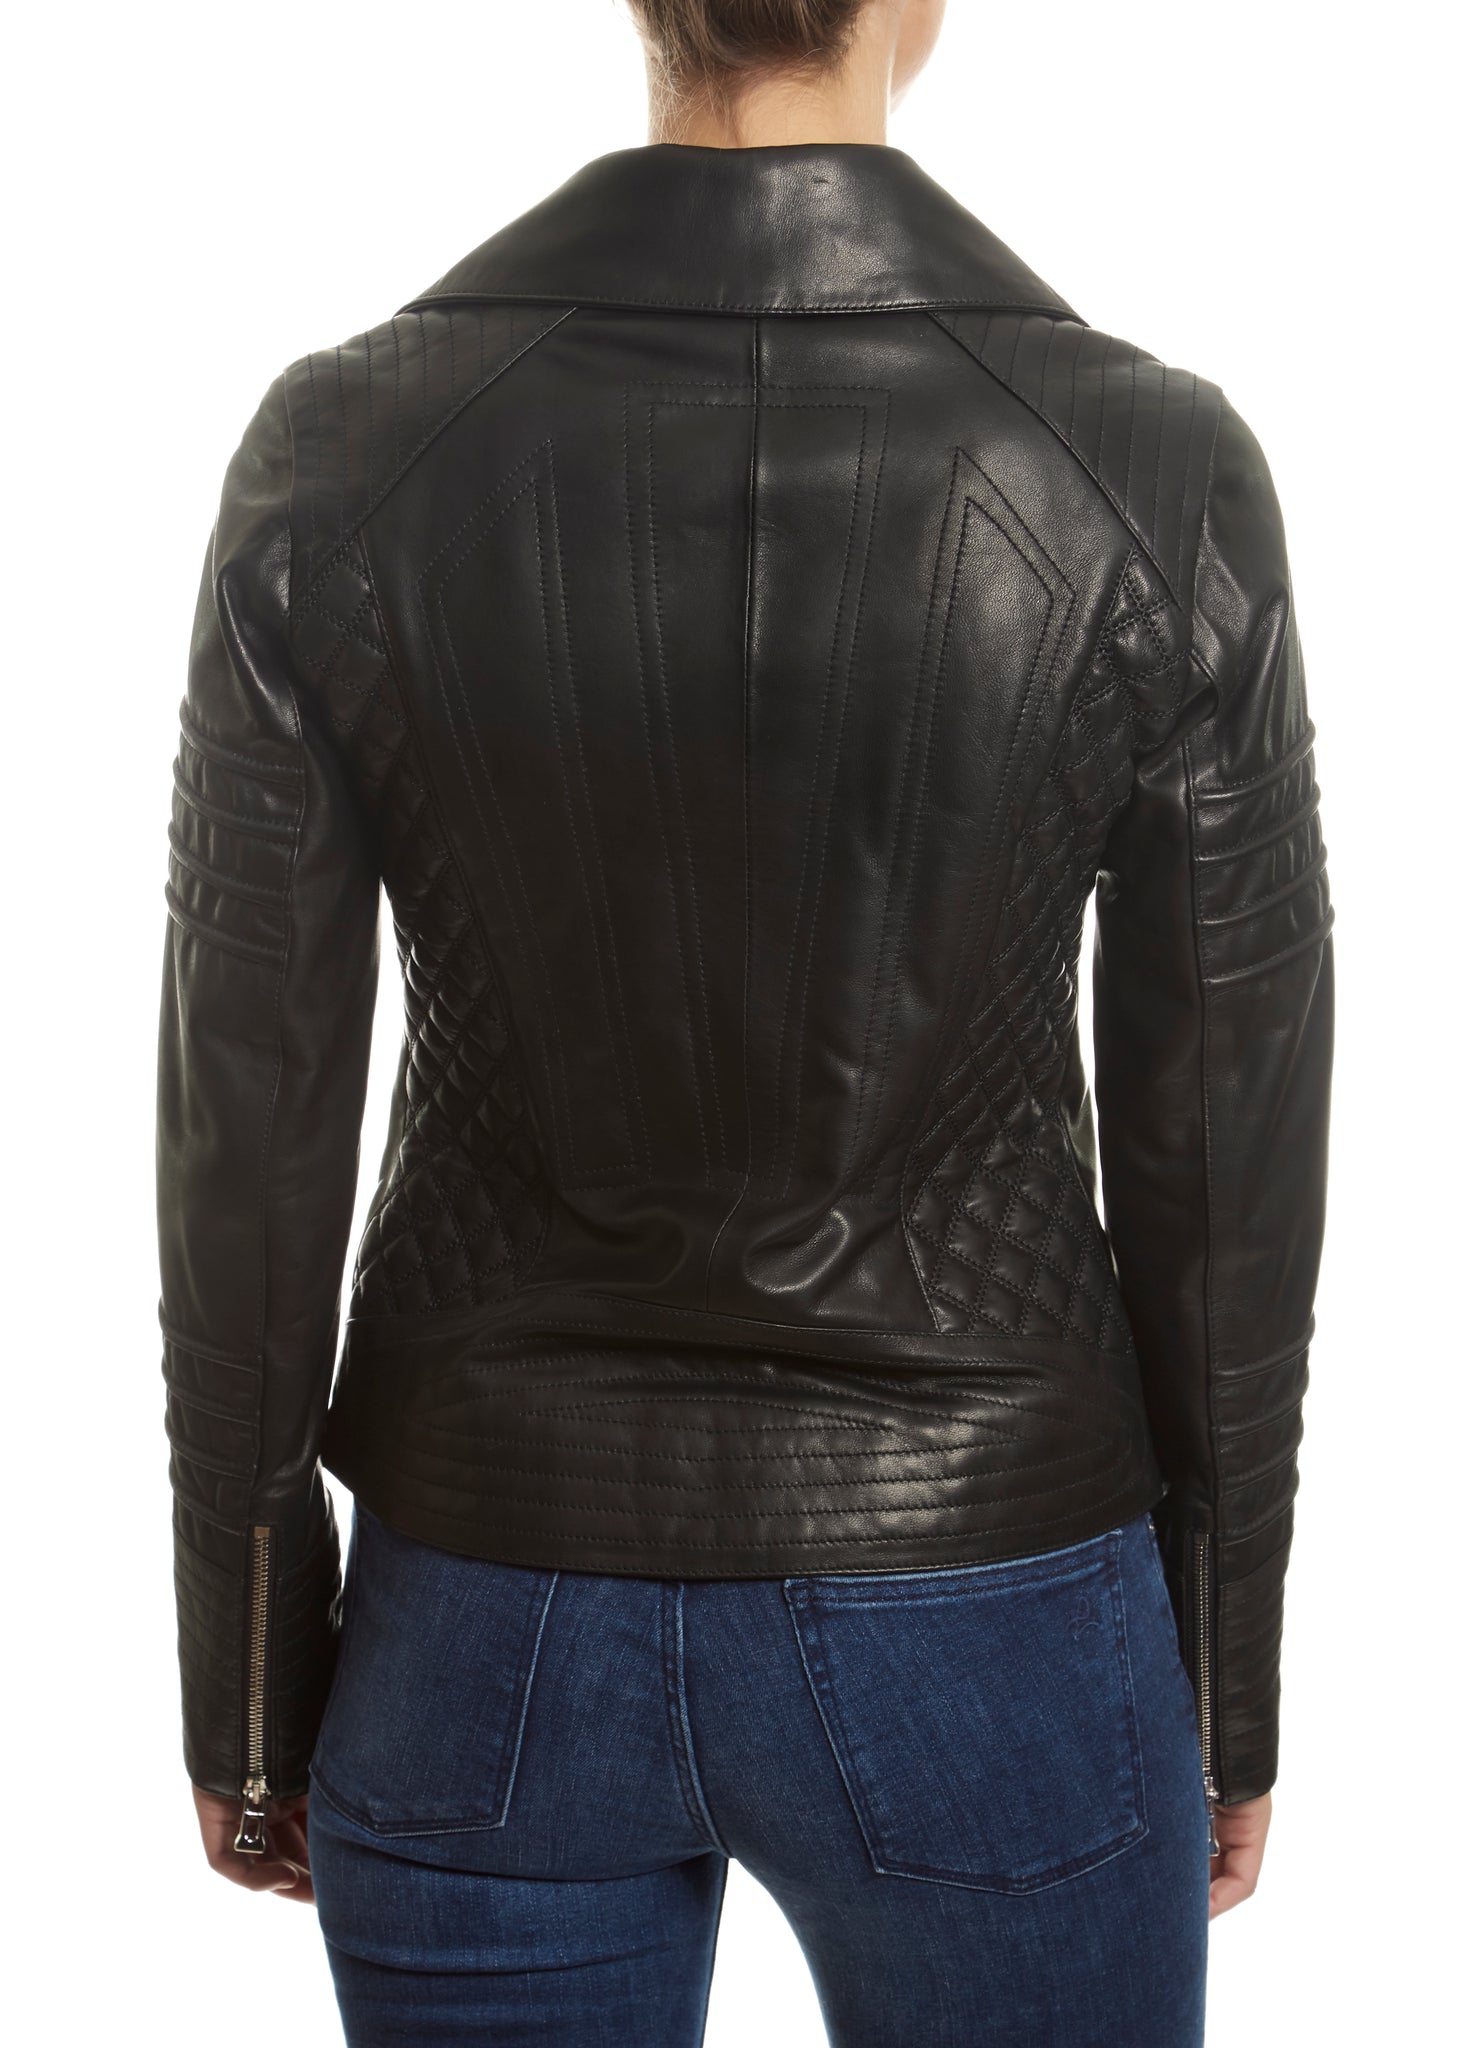 Black 'Quilted' Leather Jacket - Jessimara